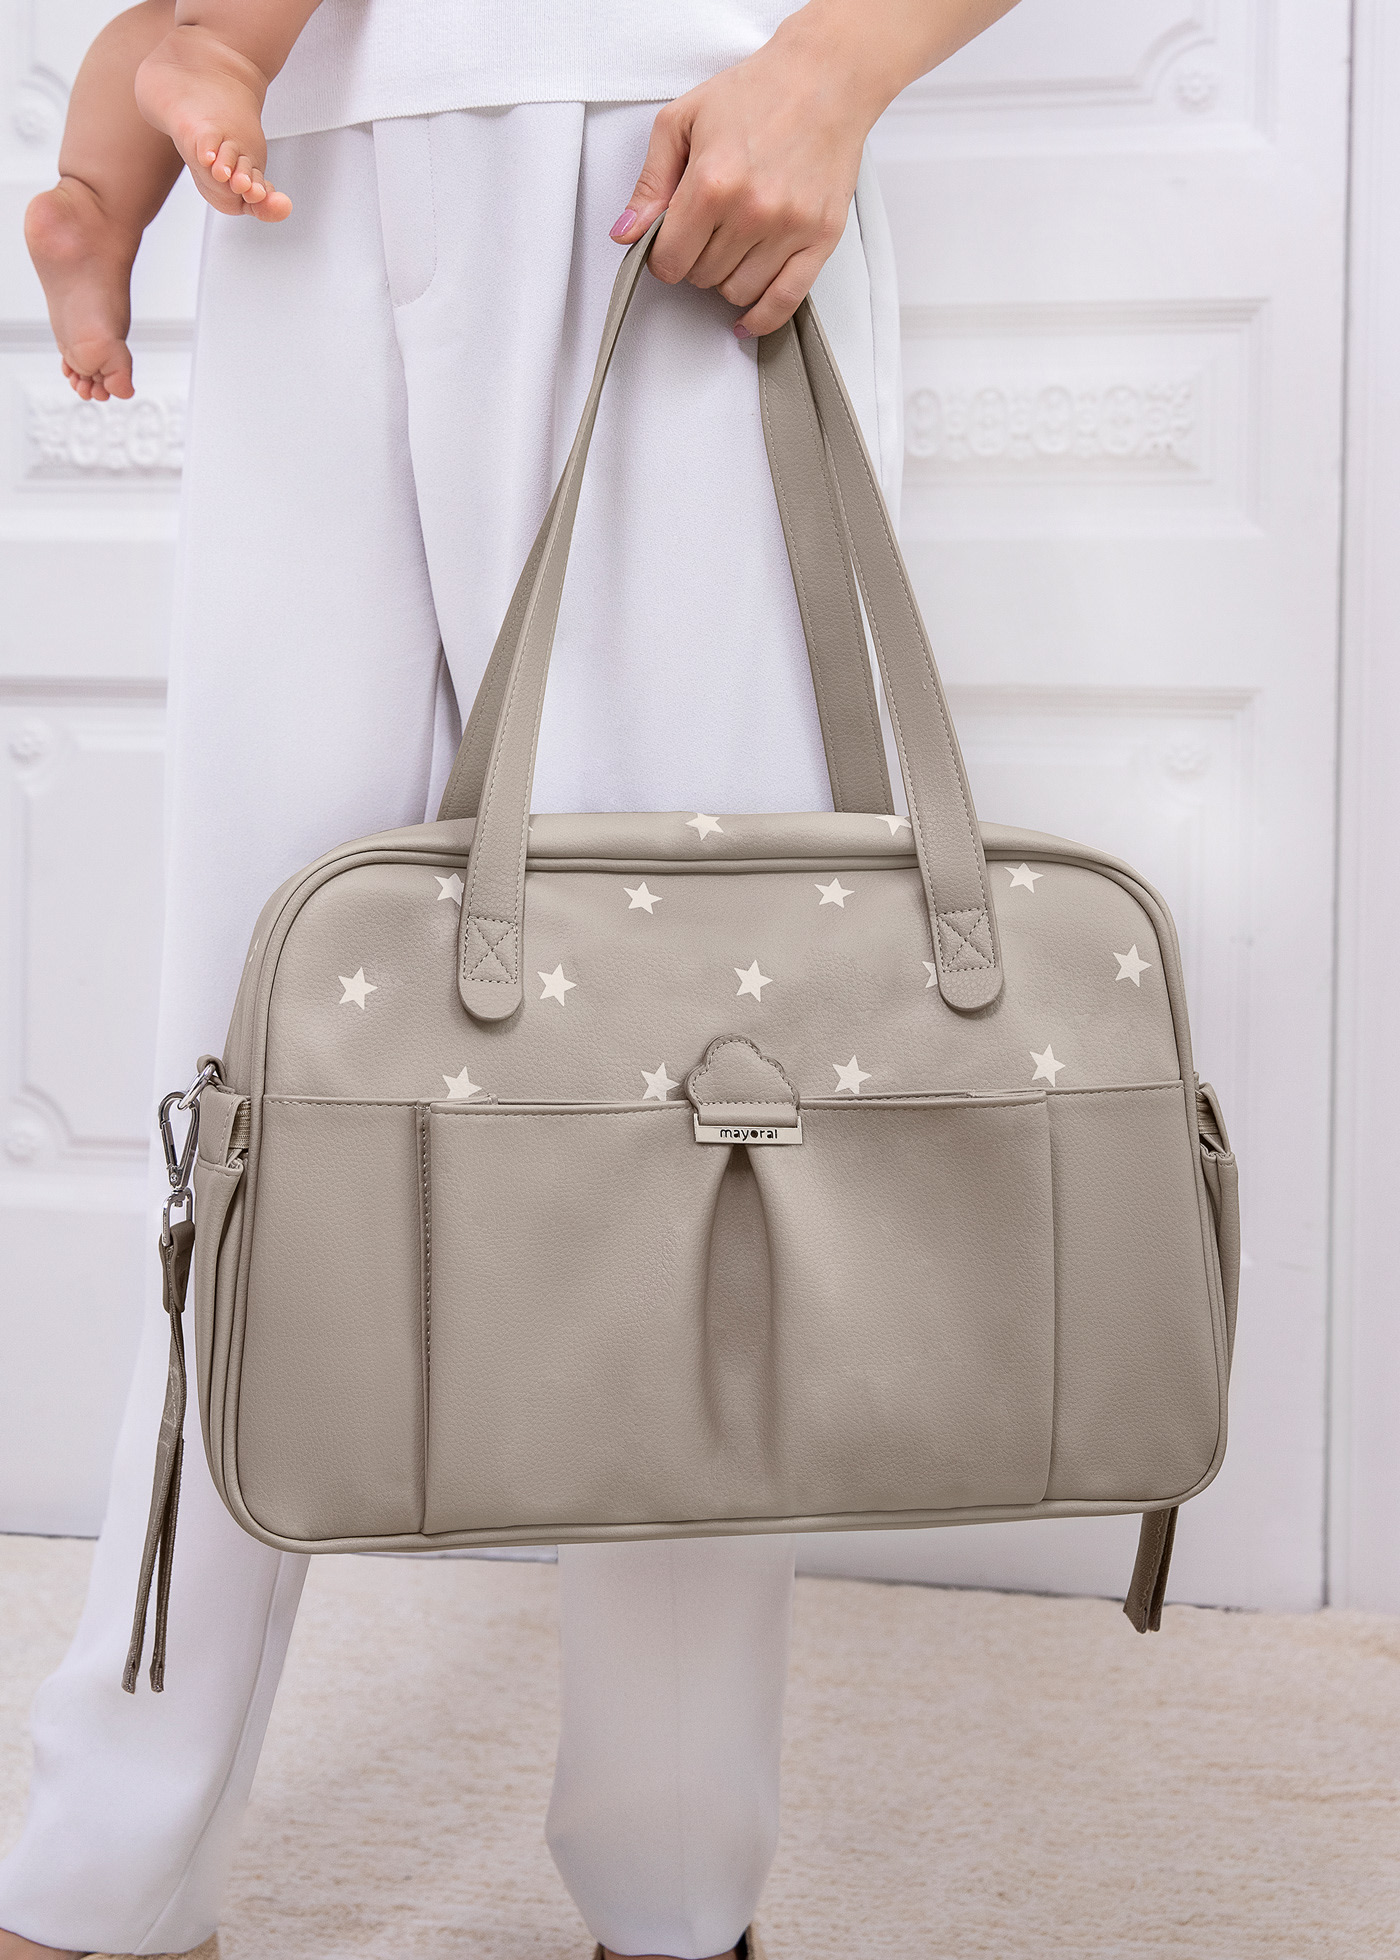 Star Design Baby Bag